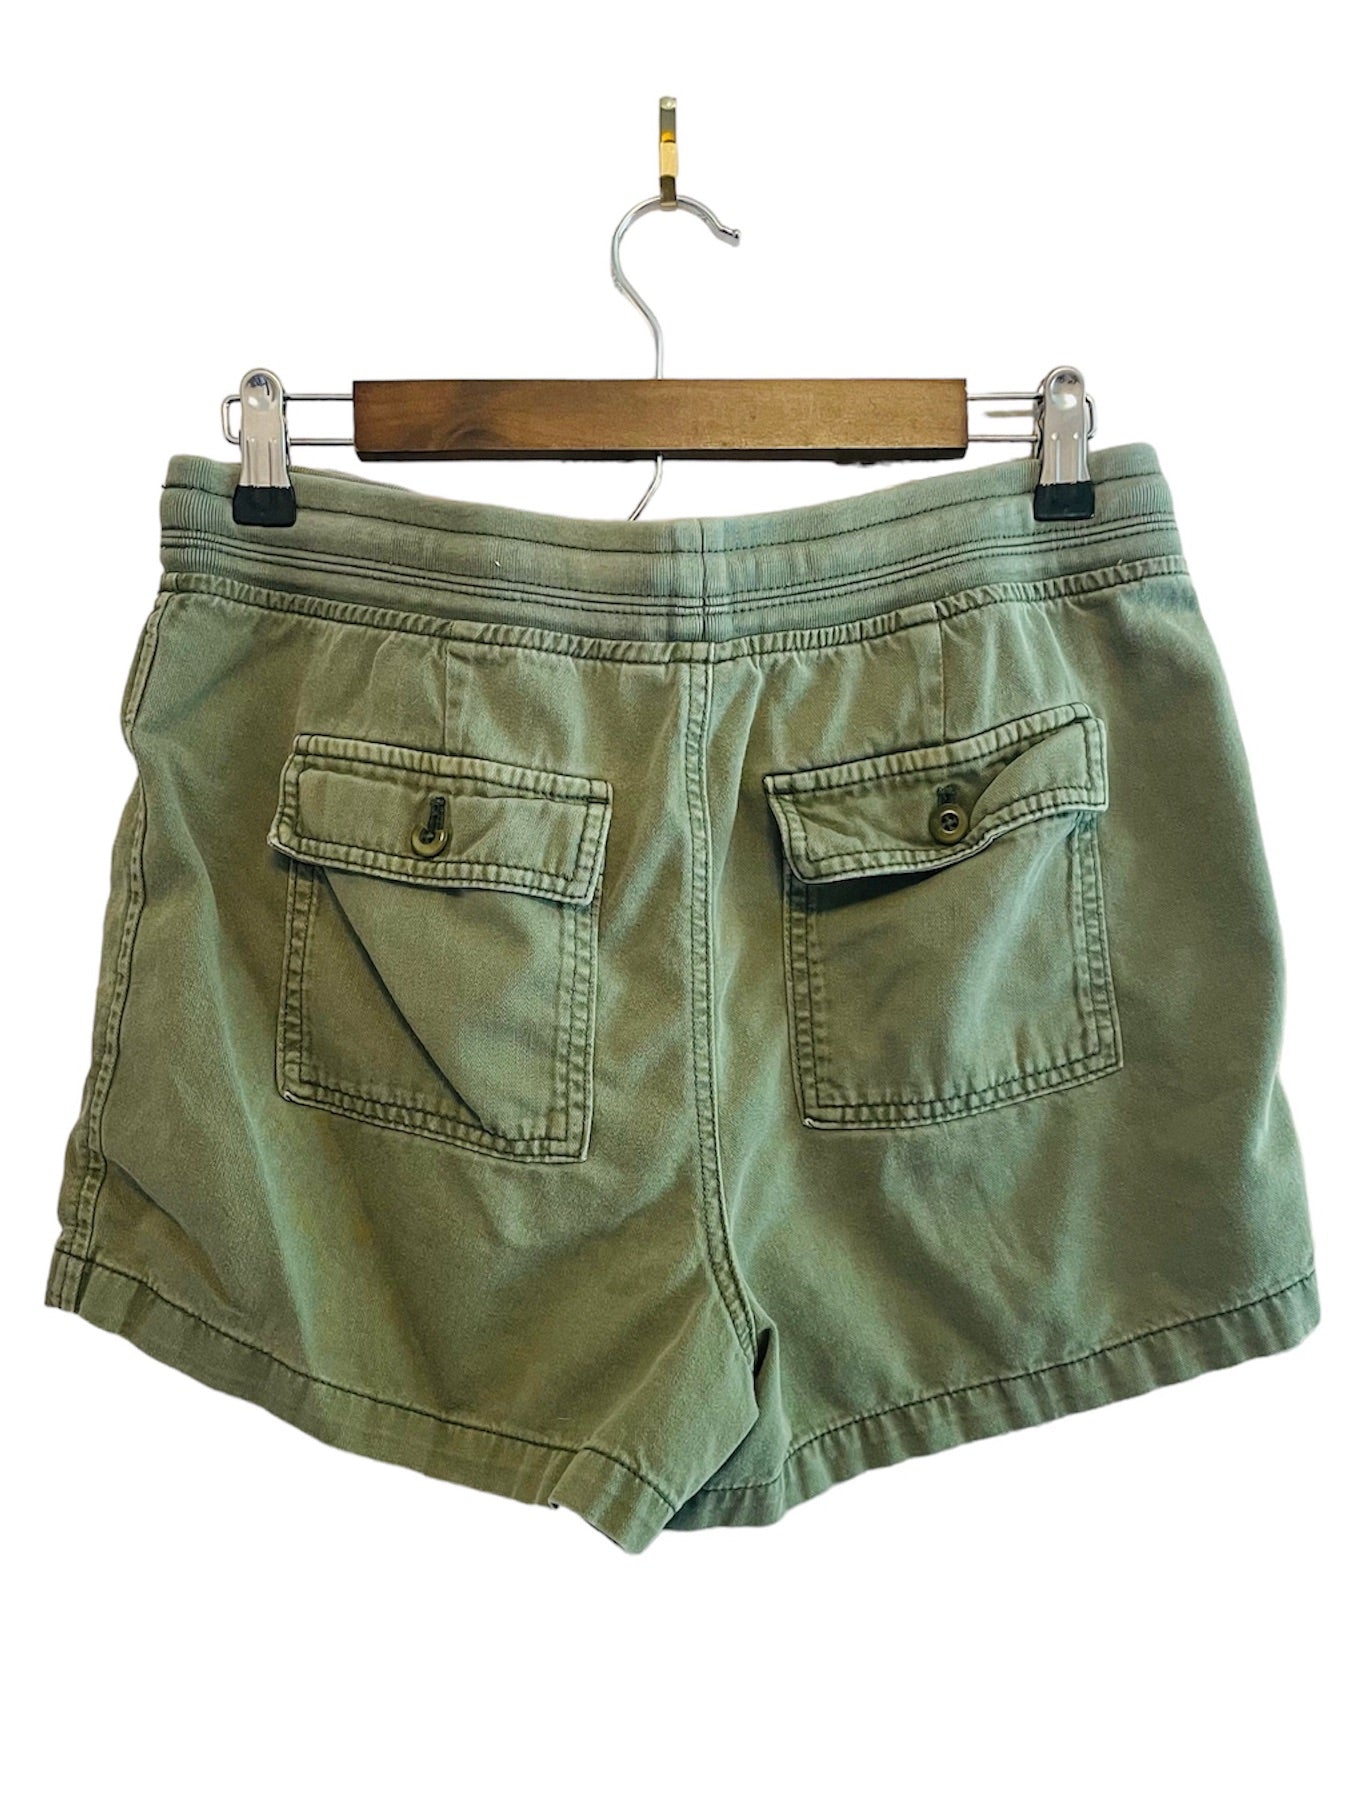 Khaki Green Shorts Size: Medium